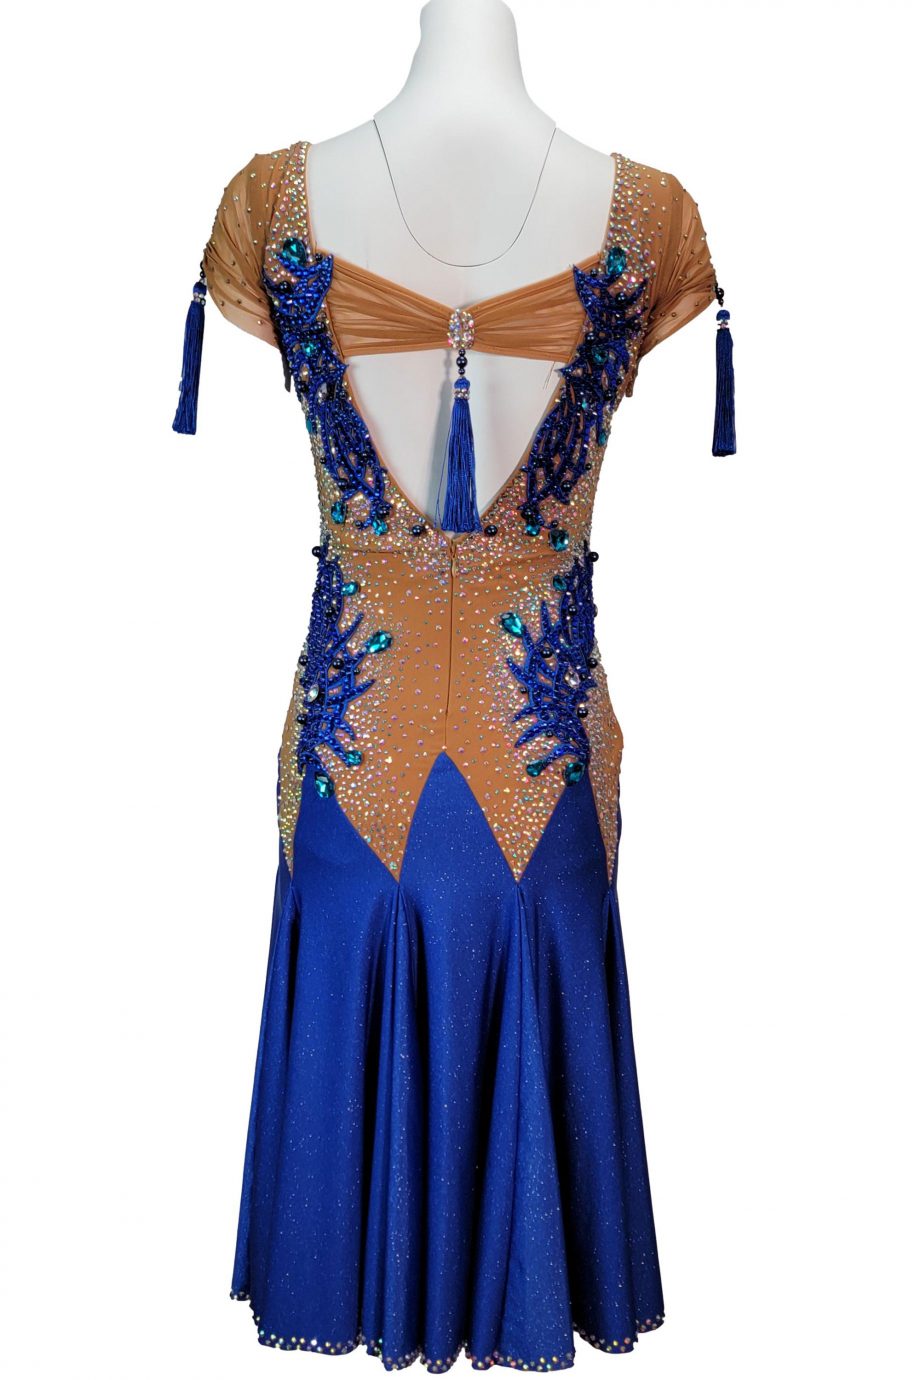 Cashay designer Latin dress | Narnia Back